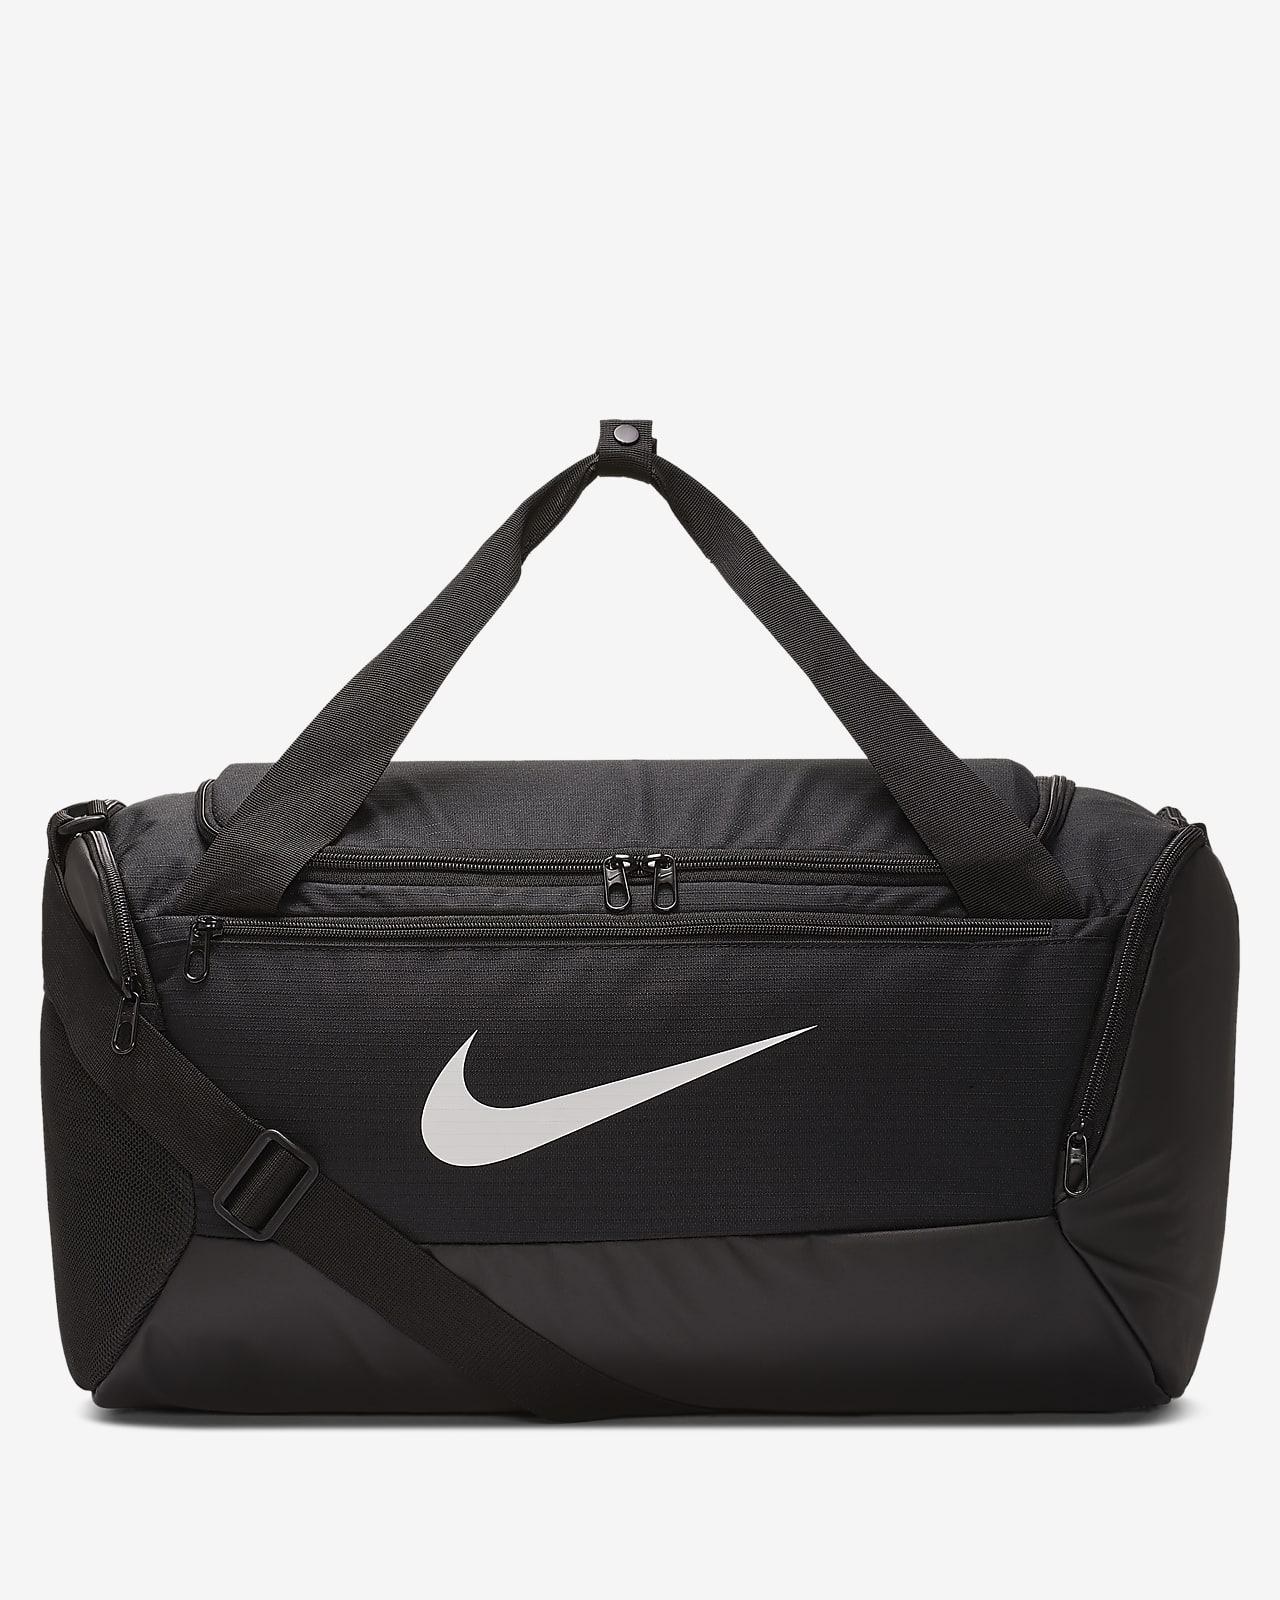 Cielo Depresión Resentimiento Nike Brasilia Training Duffel Bag (Small). Nike AU